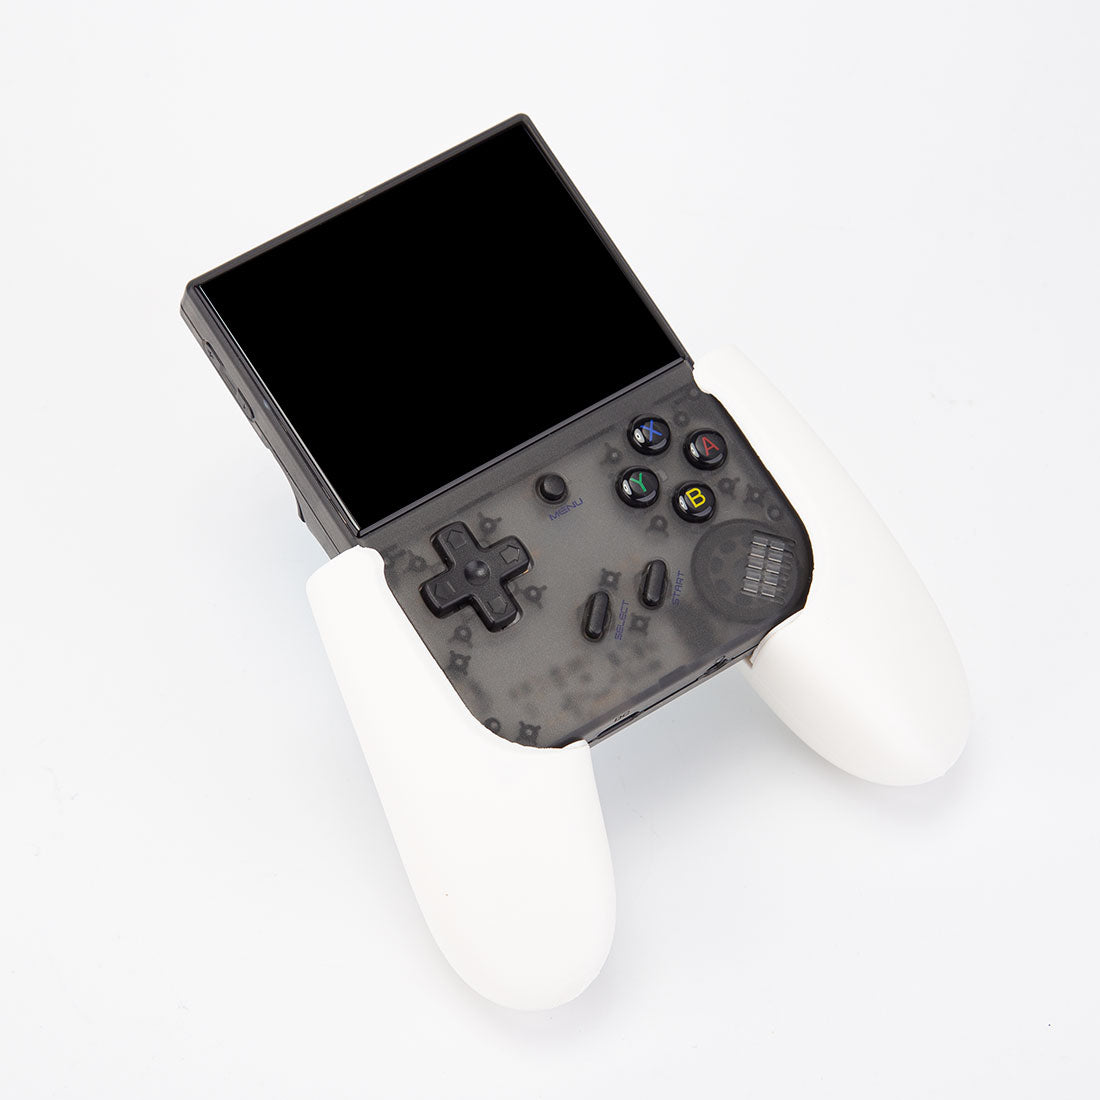 Anbernic RG35XX Plus Game Console Controller Handle - Mechdiy